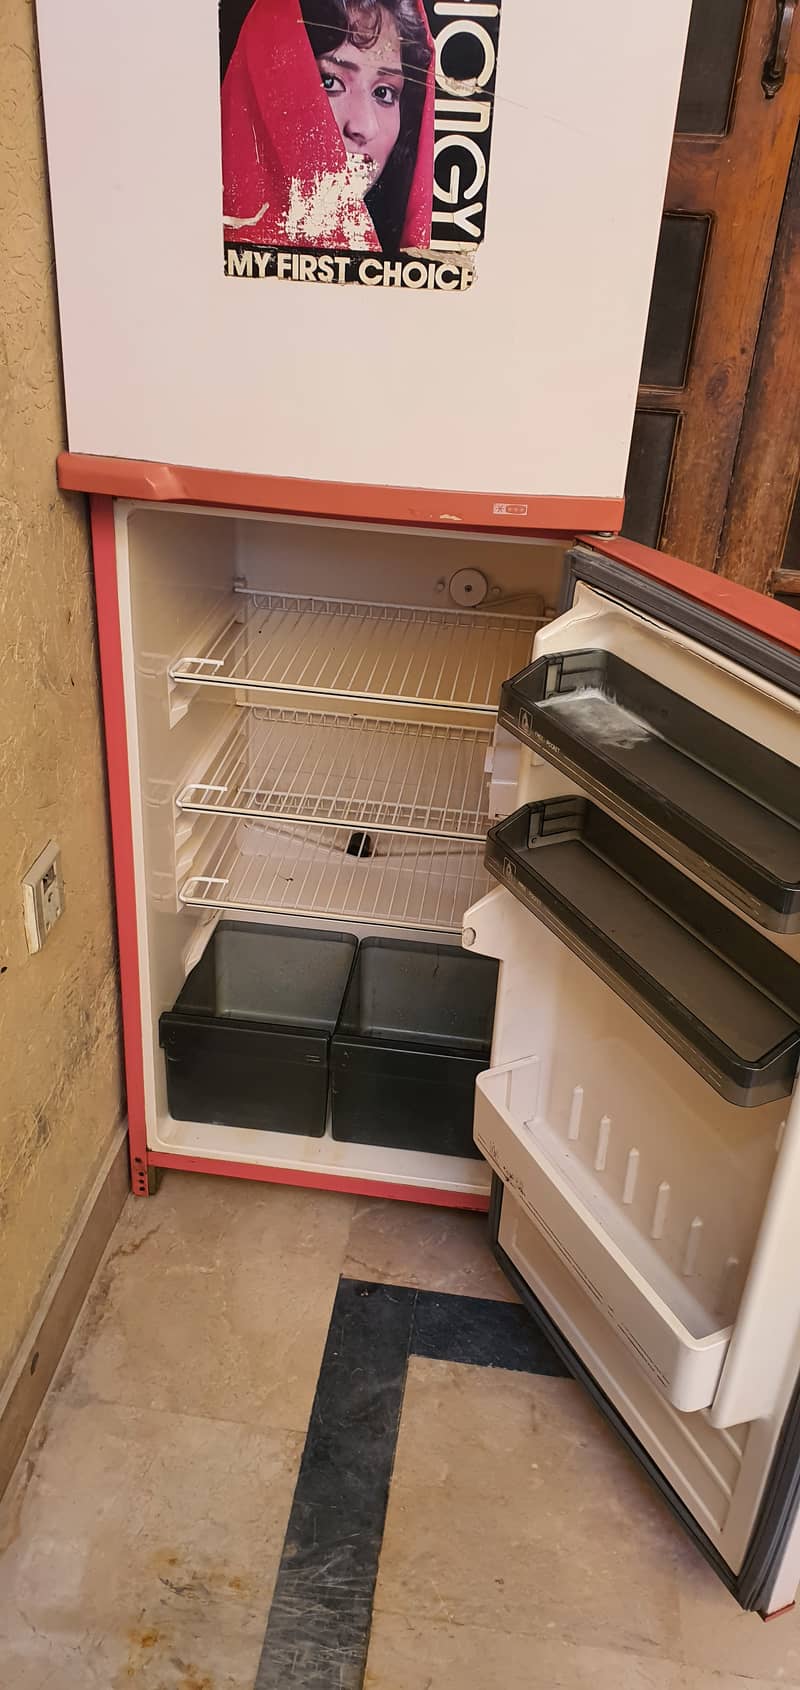 Refrigerator for sale v good condition 4